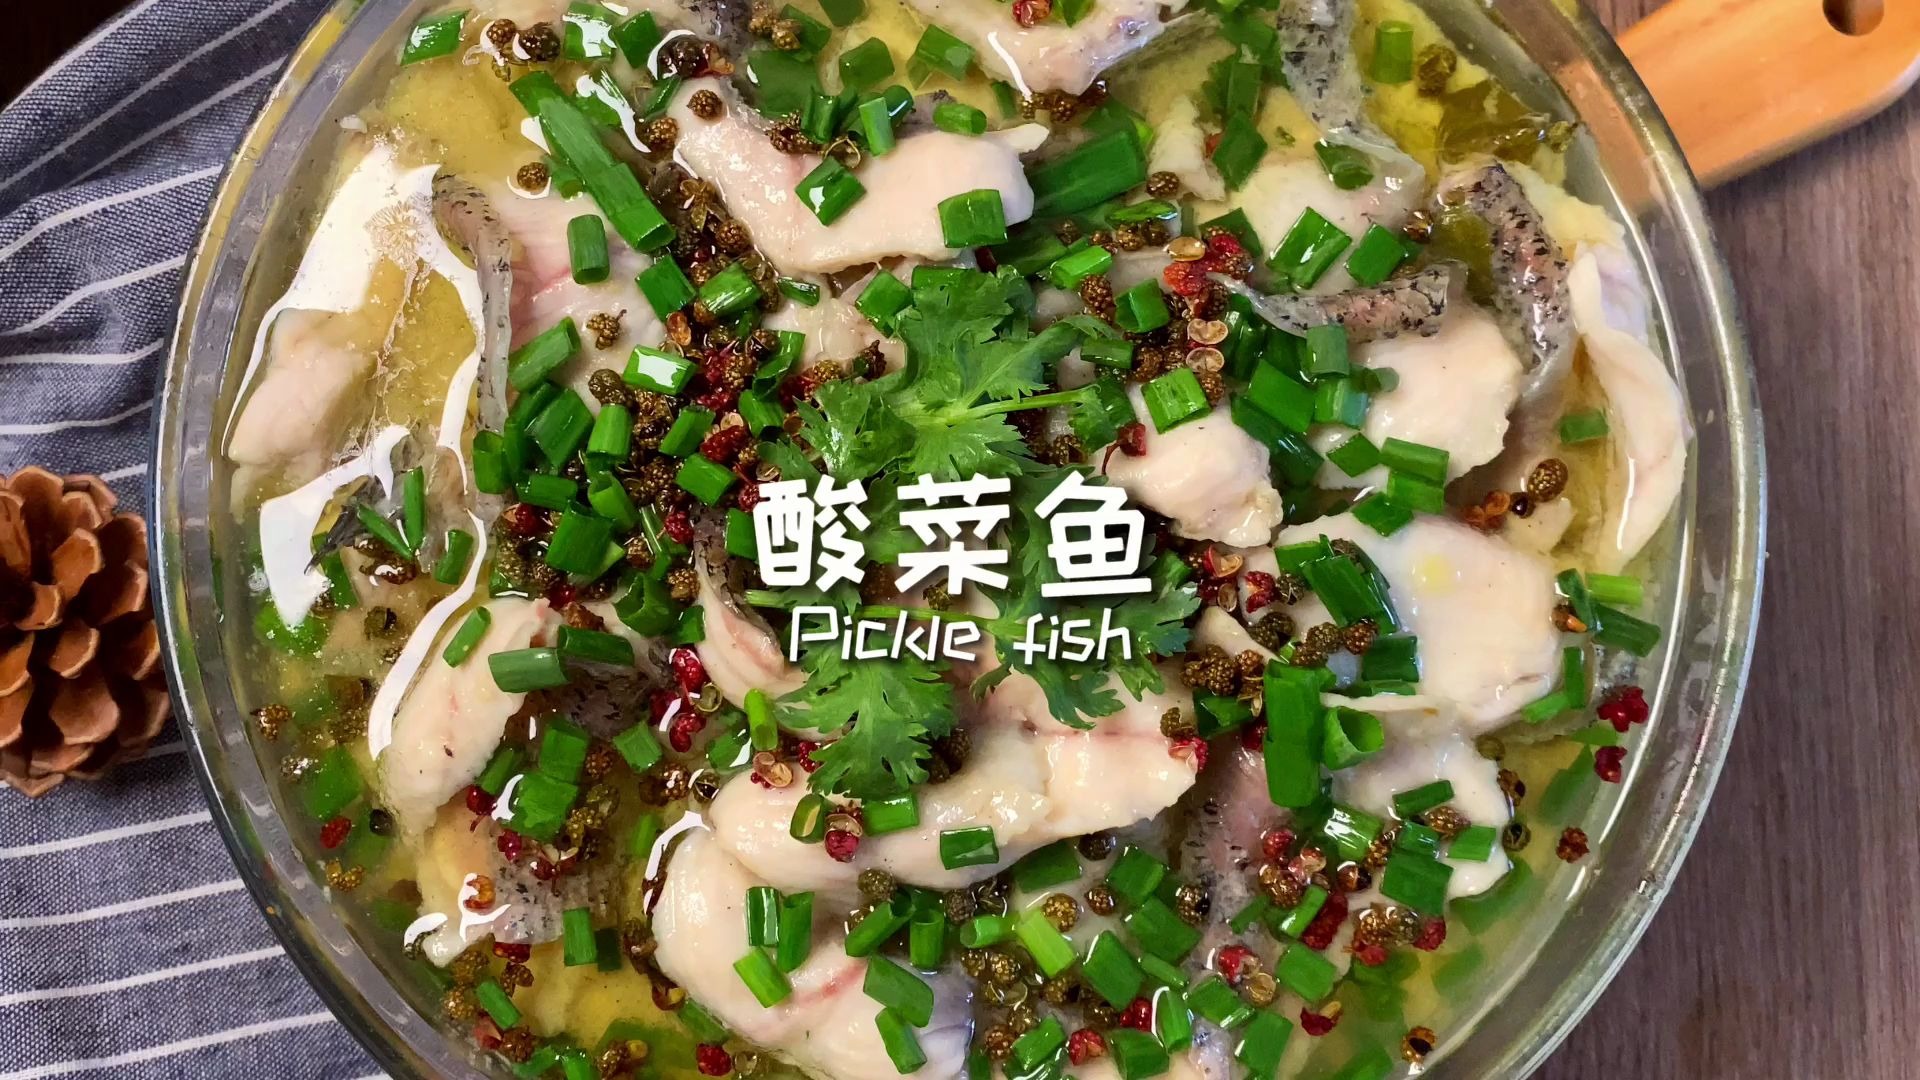 suan cai yu pickled fish pickle fish dish